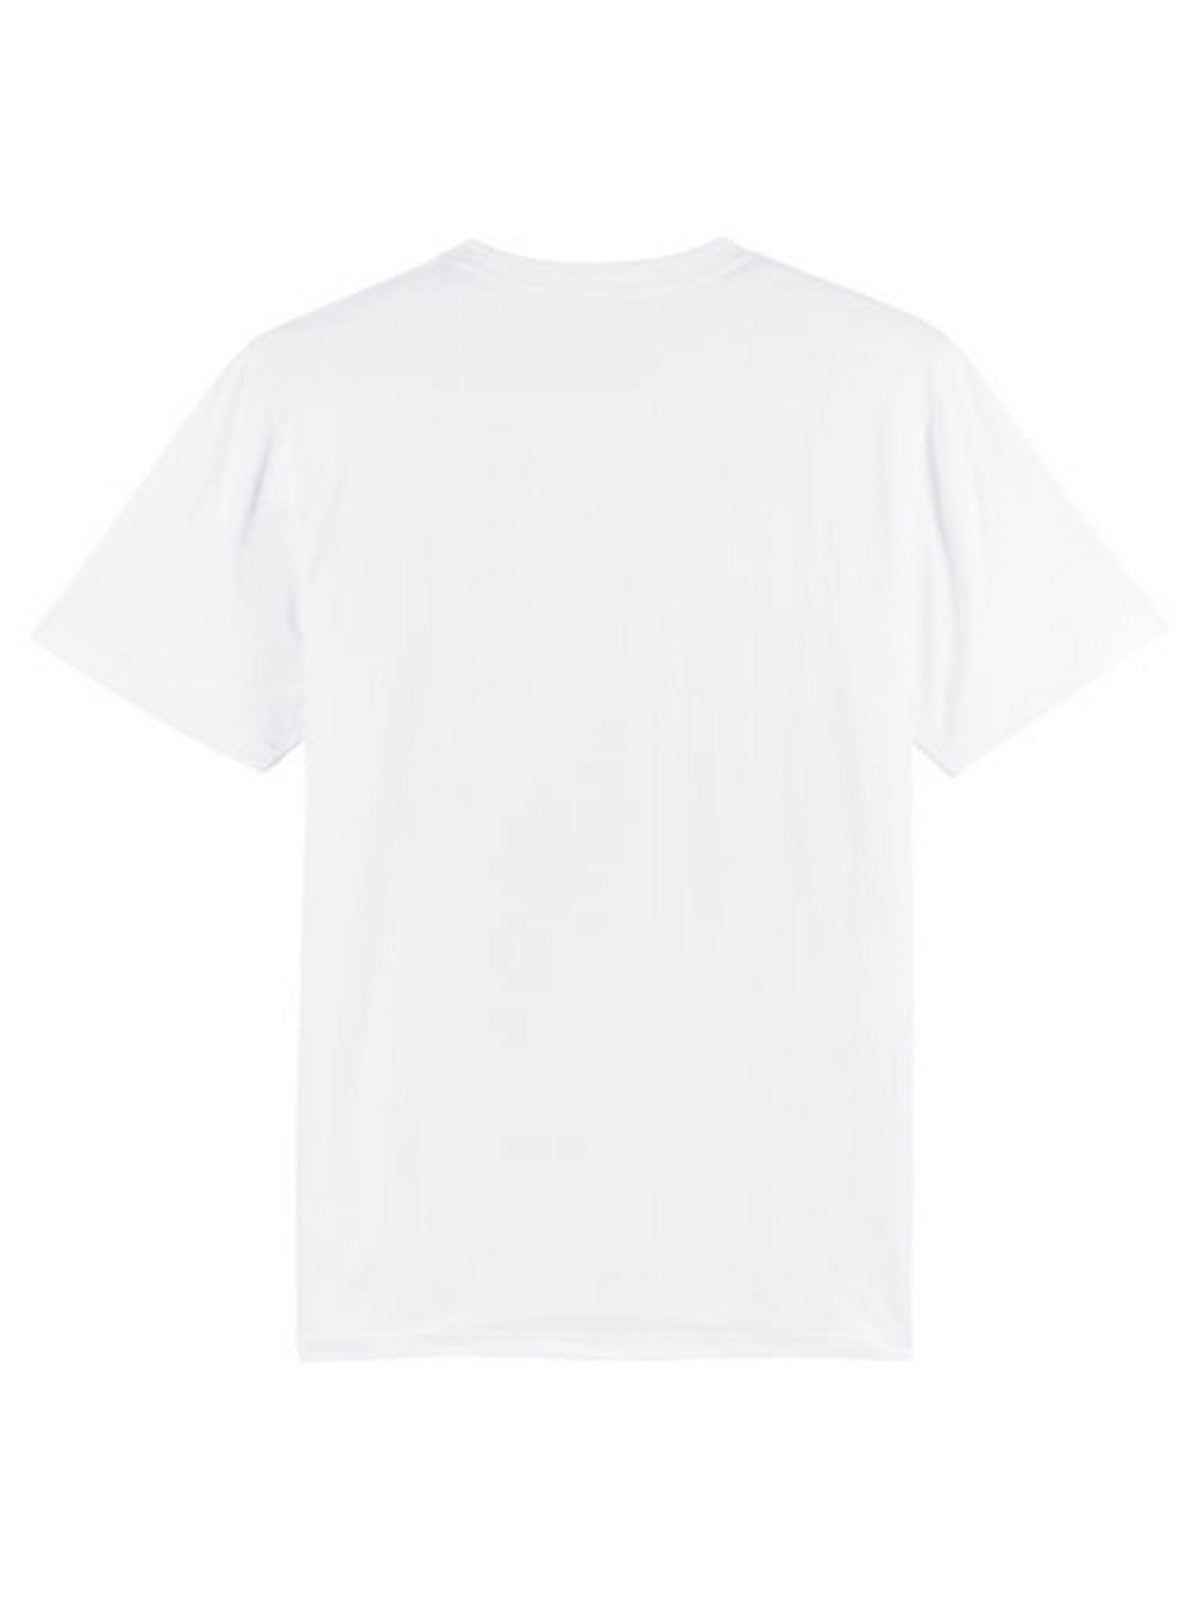 BARON FILOU T-Shirt e Polo Uomo  T-SHIRT FILOU XVIII Bianco